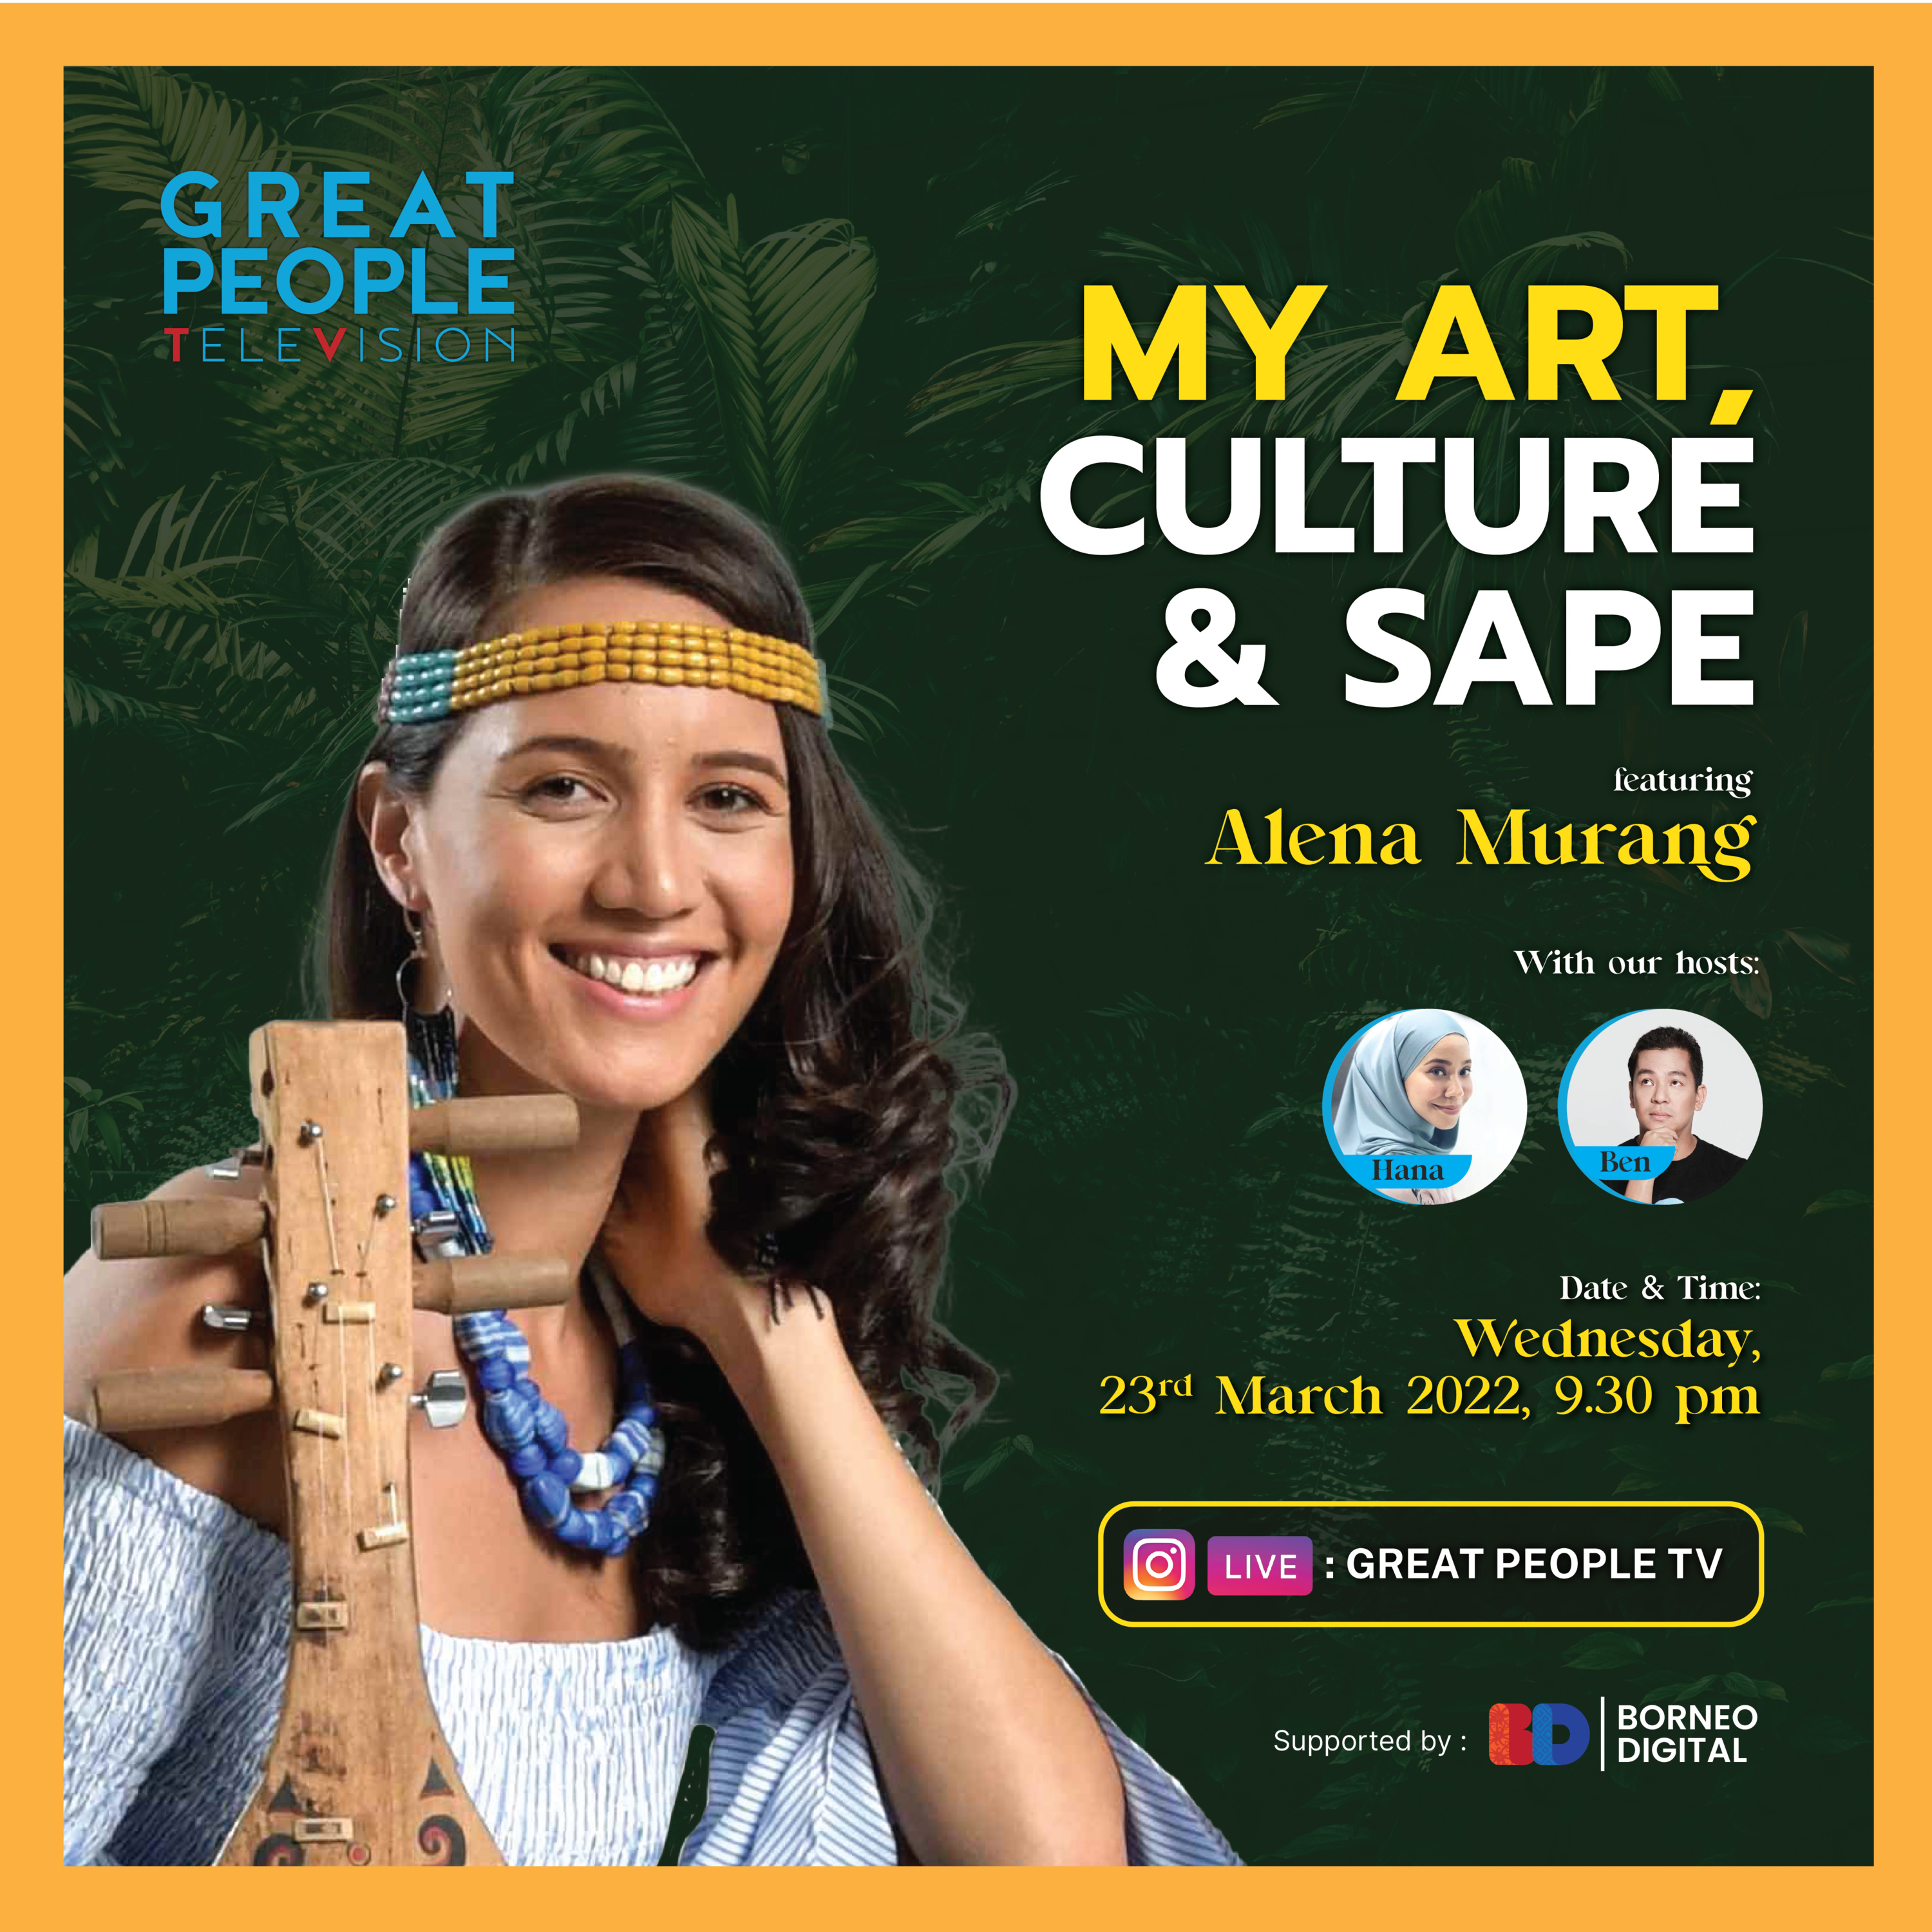 My Art, Culture & Sape - Alena Murang